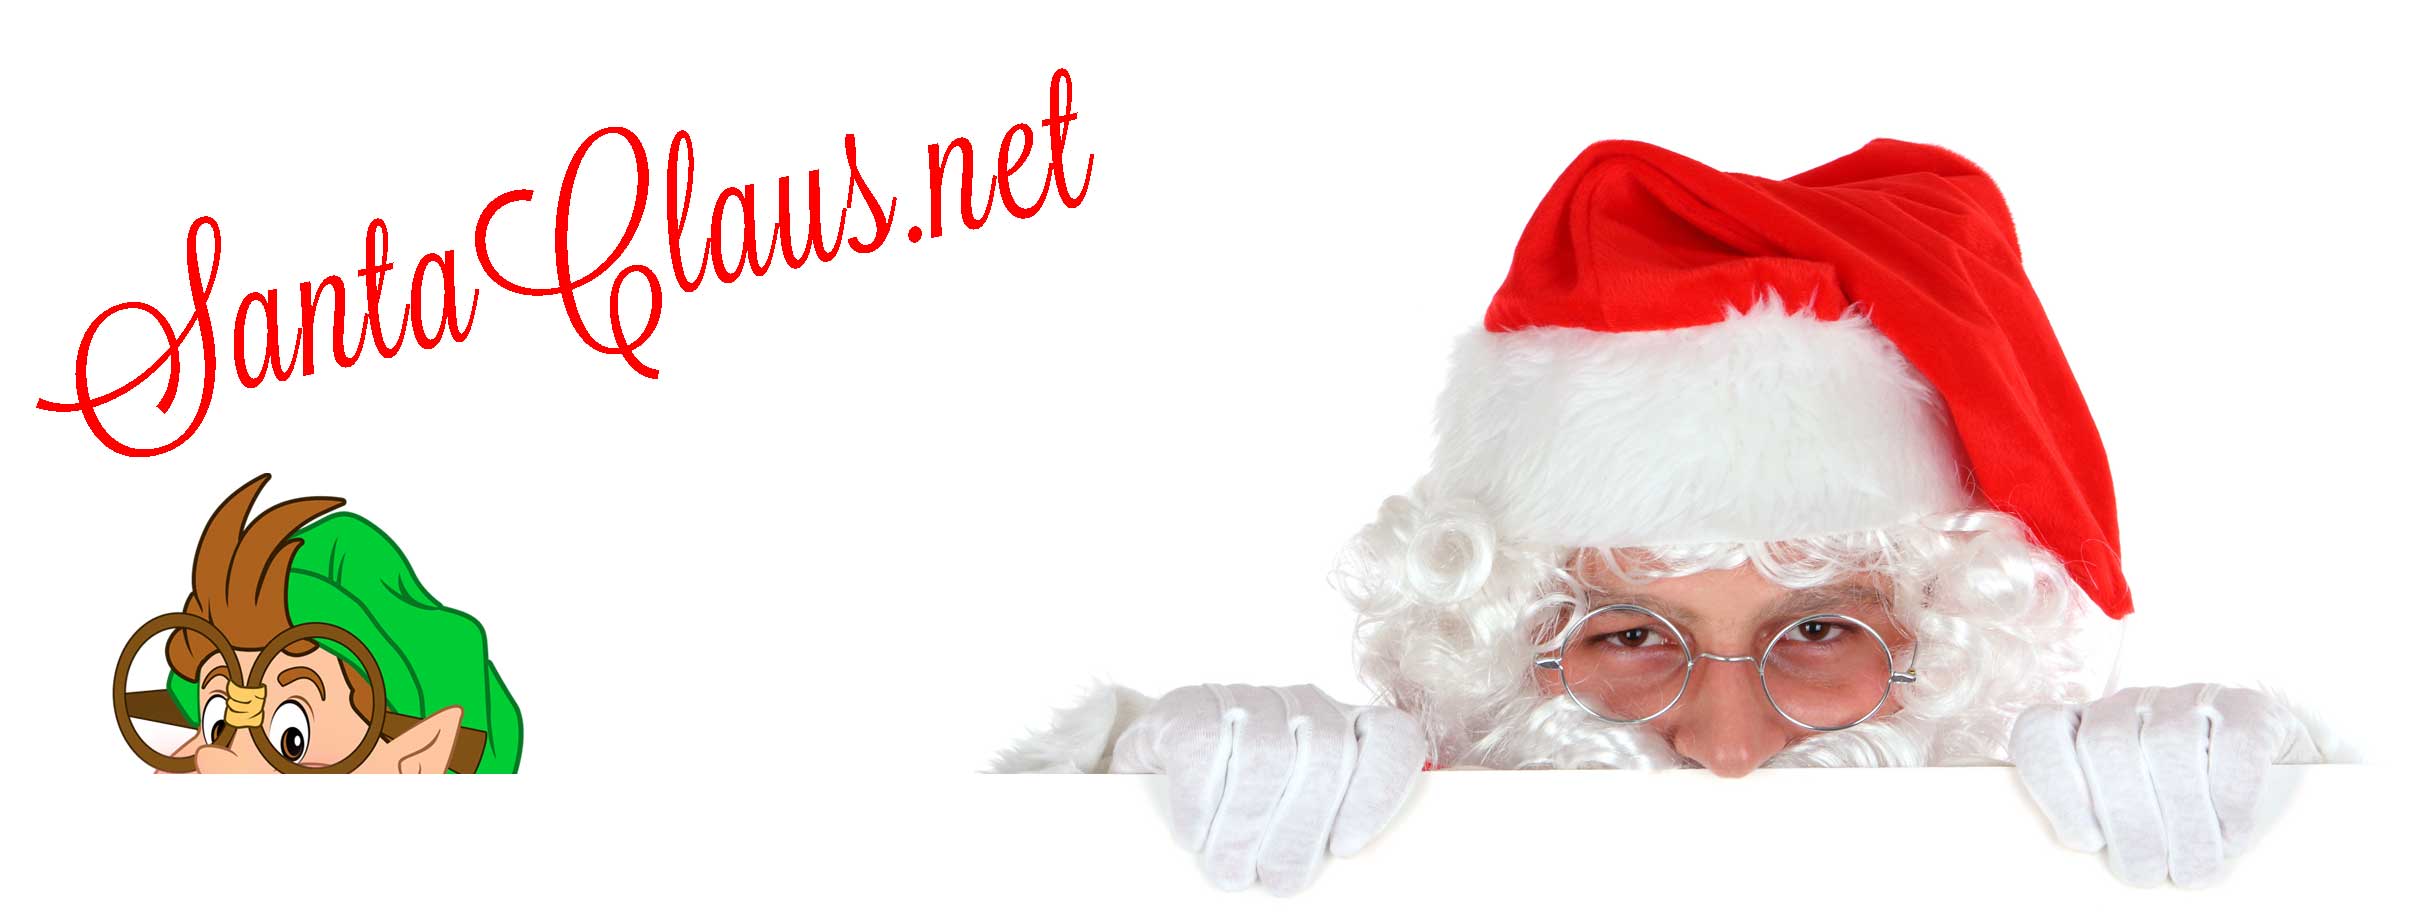 [Santa Claus Network]